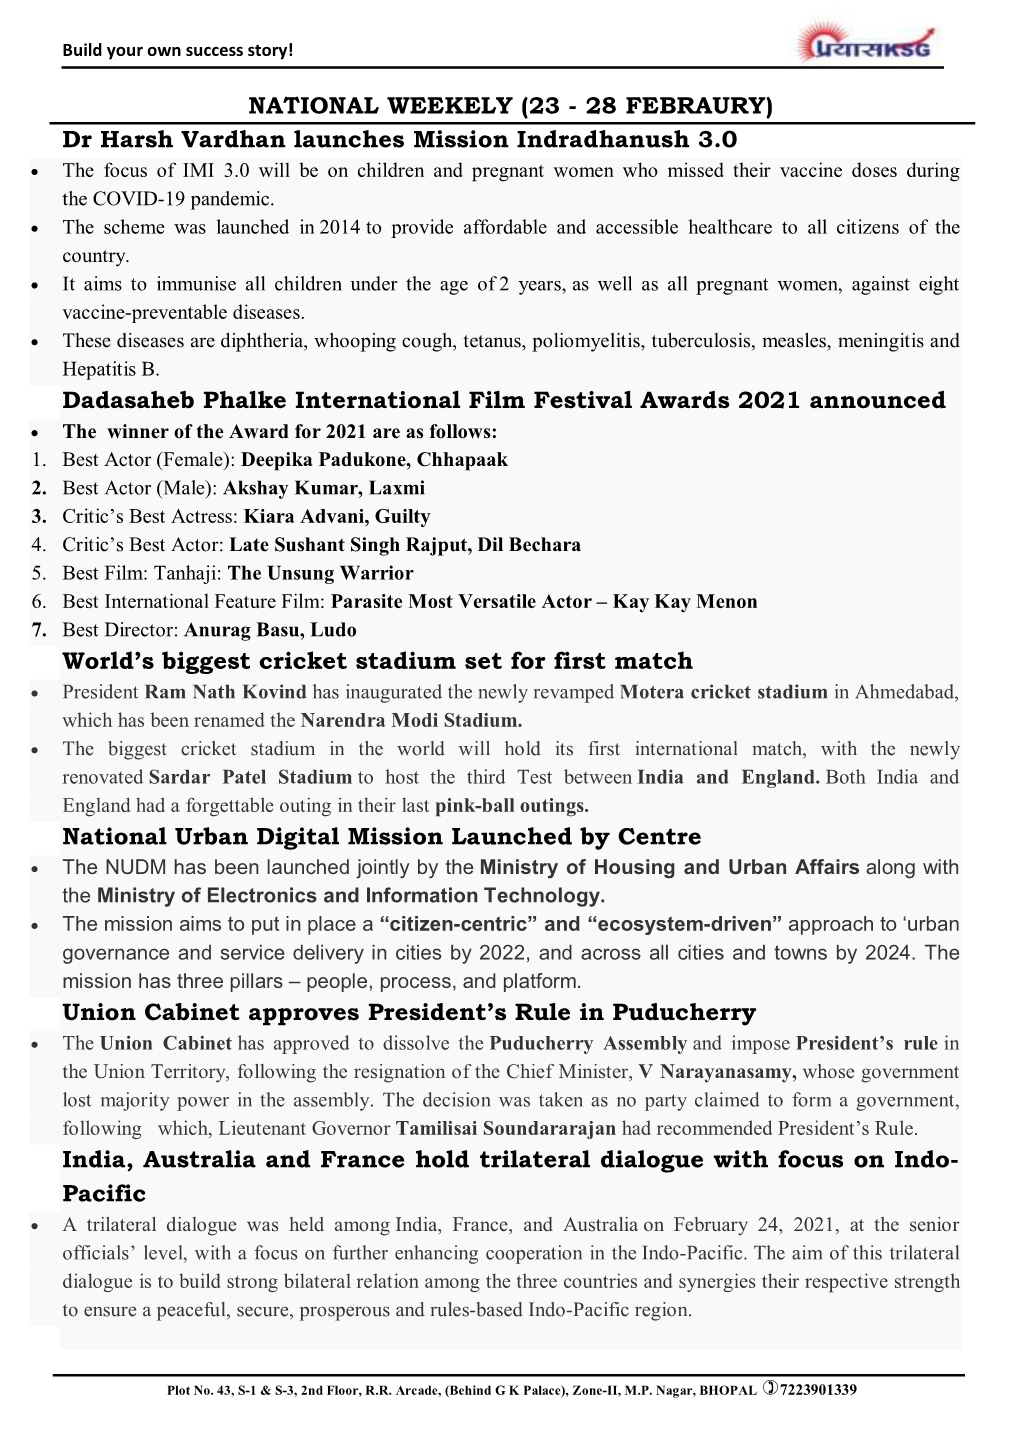 Dr Harsh Vardhan Launches Mission Indradhanush 3.0 Dadasaheb Phalke International Film Festi